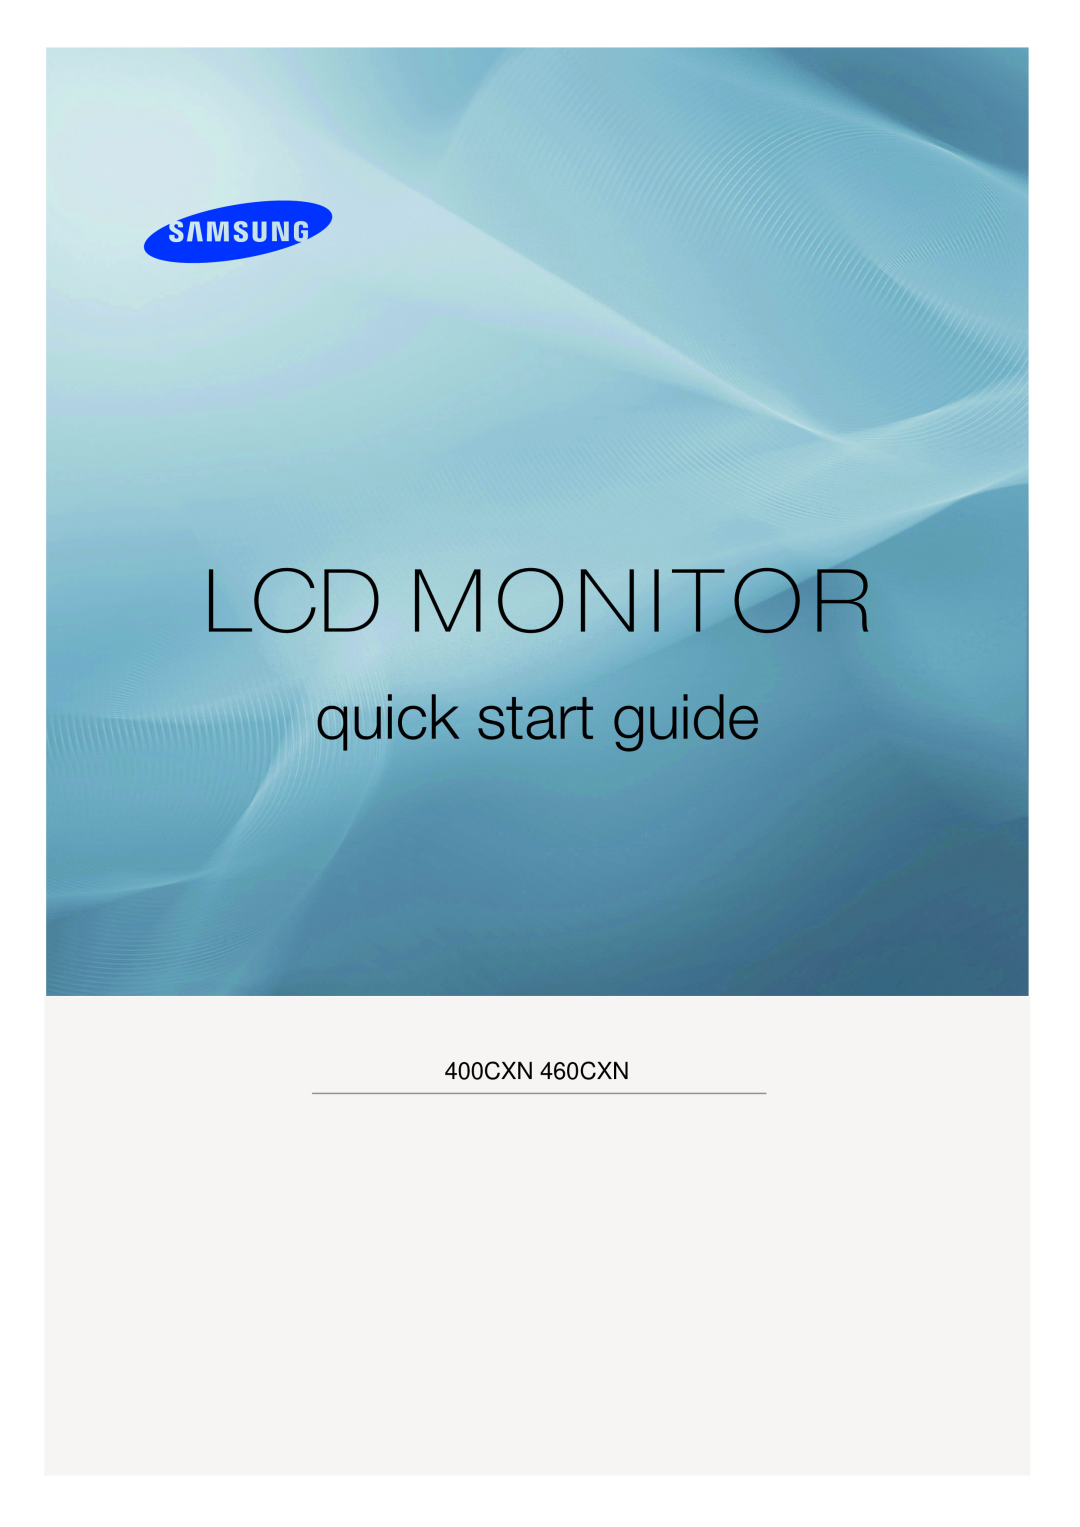 Samsung 400CXn quick start Lcd Monitor, quick start guide, 400CXN 460CXN 